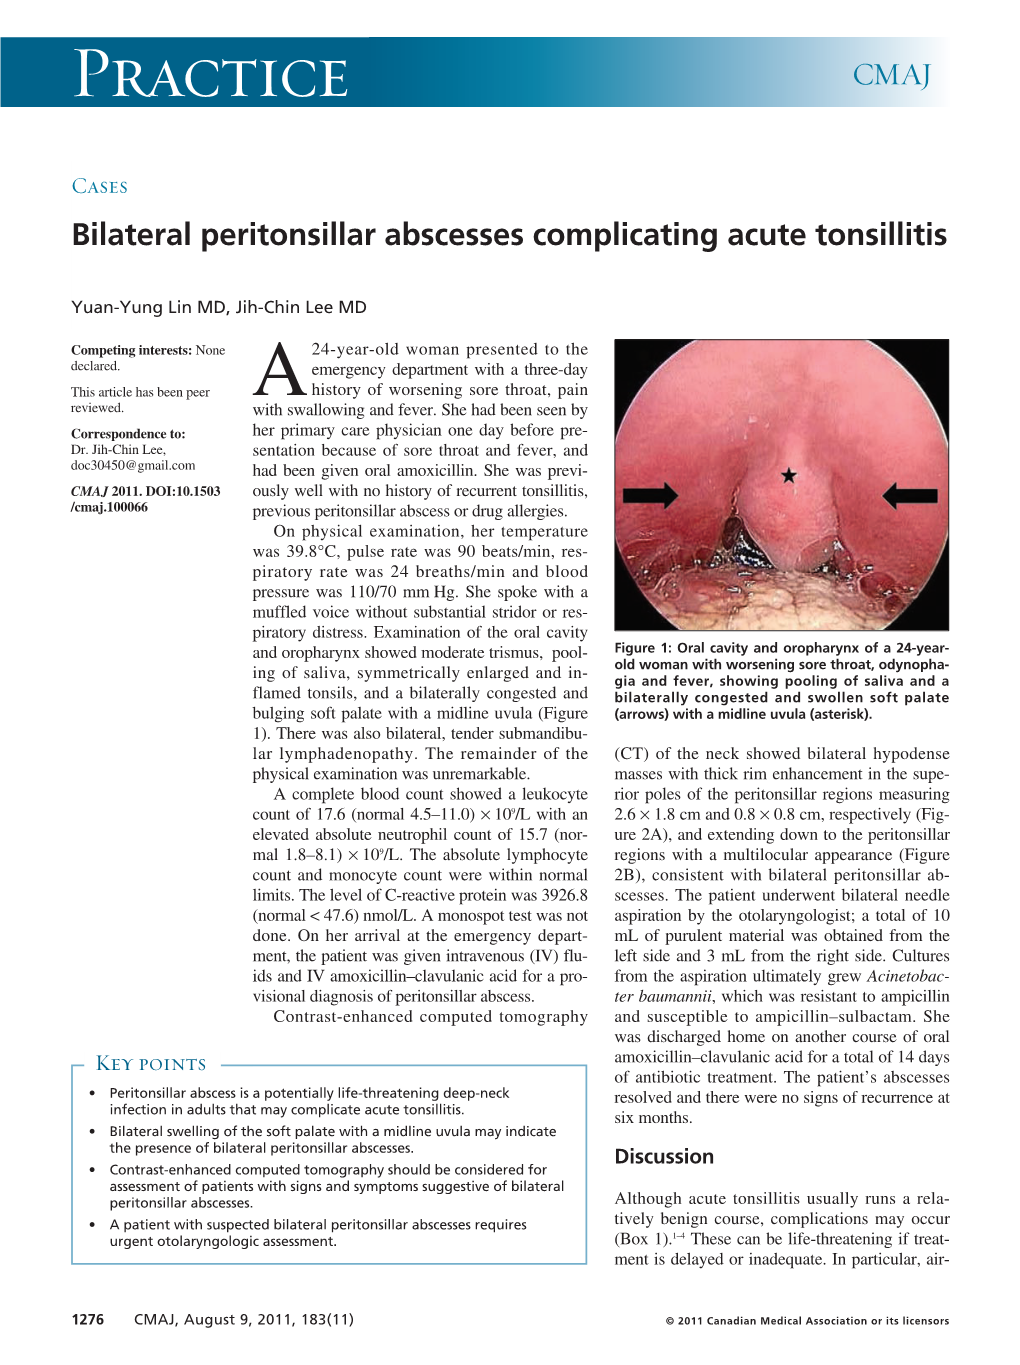 Bilateral Peritonsillar Abscesses Complicating Acute Tonsillitis